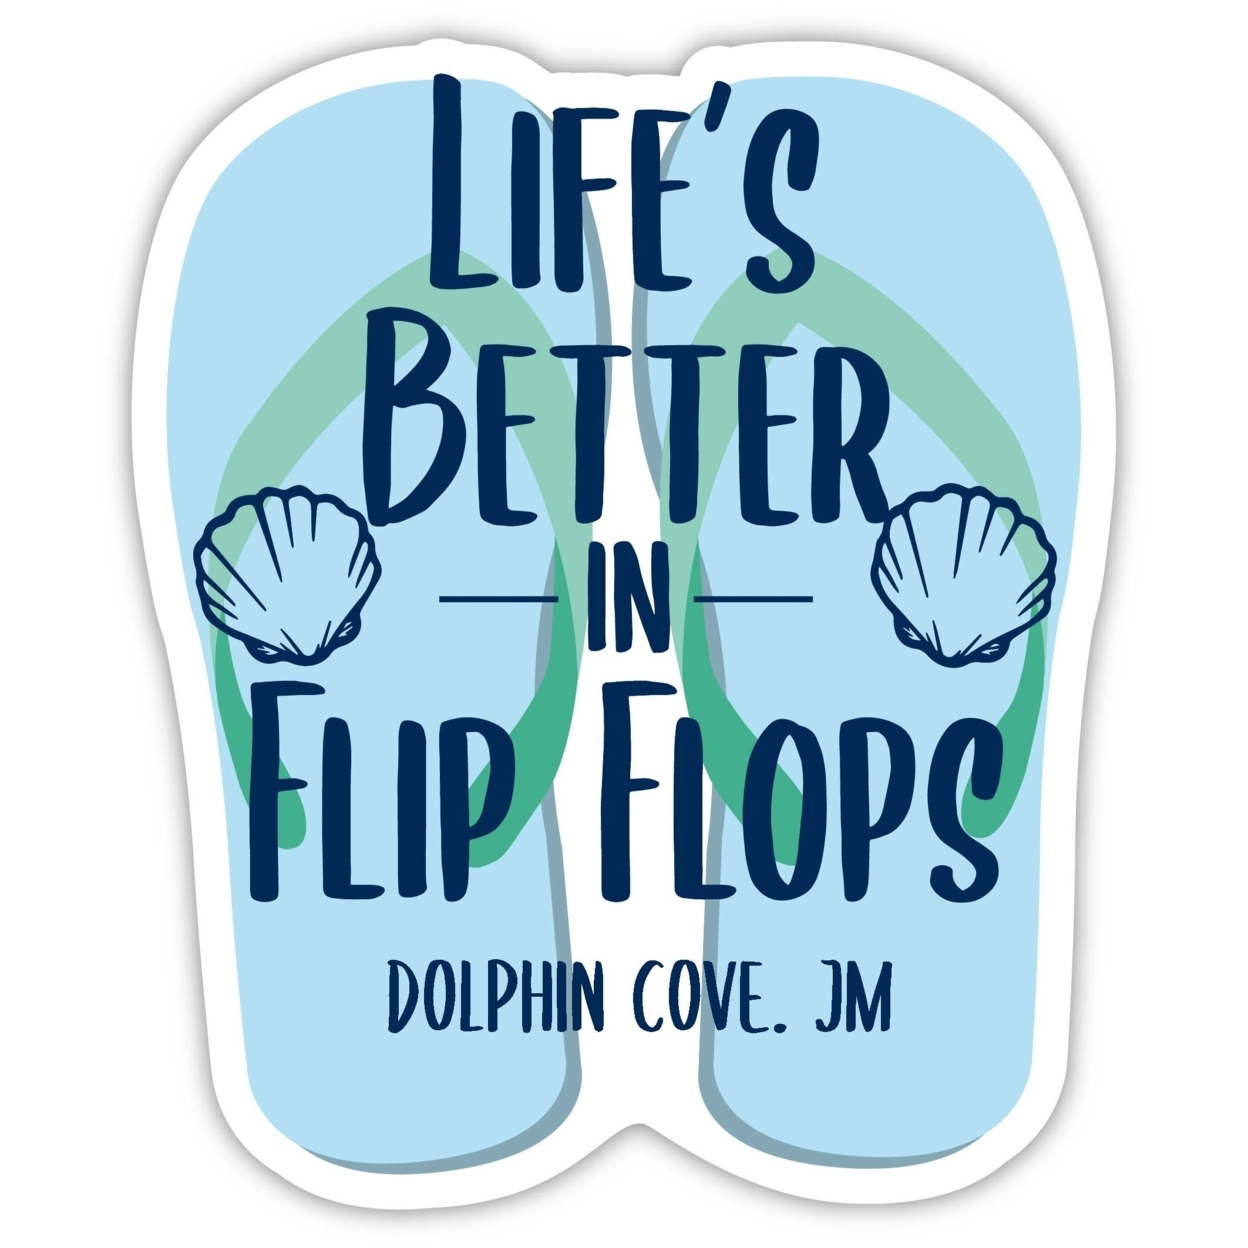 Dolphin Cove Jamaica Souvenir 4 Inch Vinyl Decal Sticker Flip Flop Design